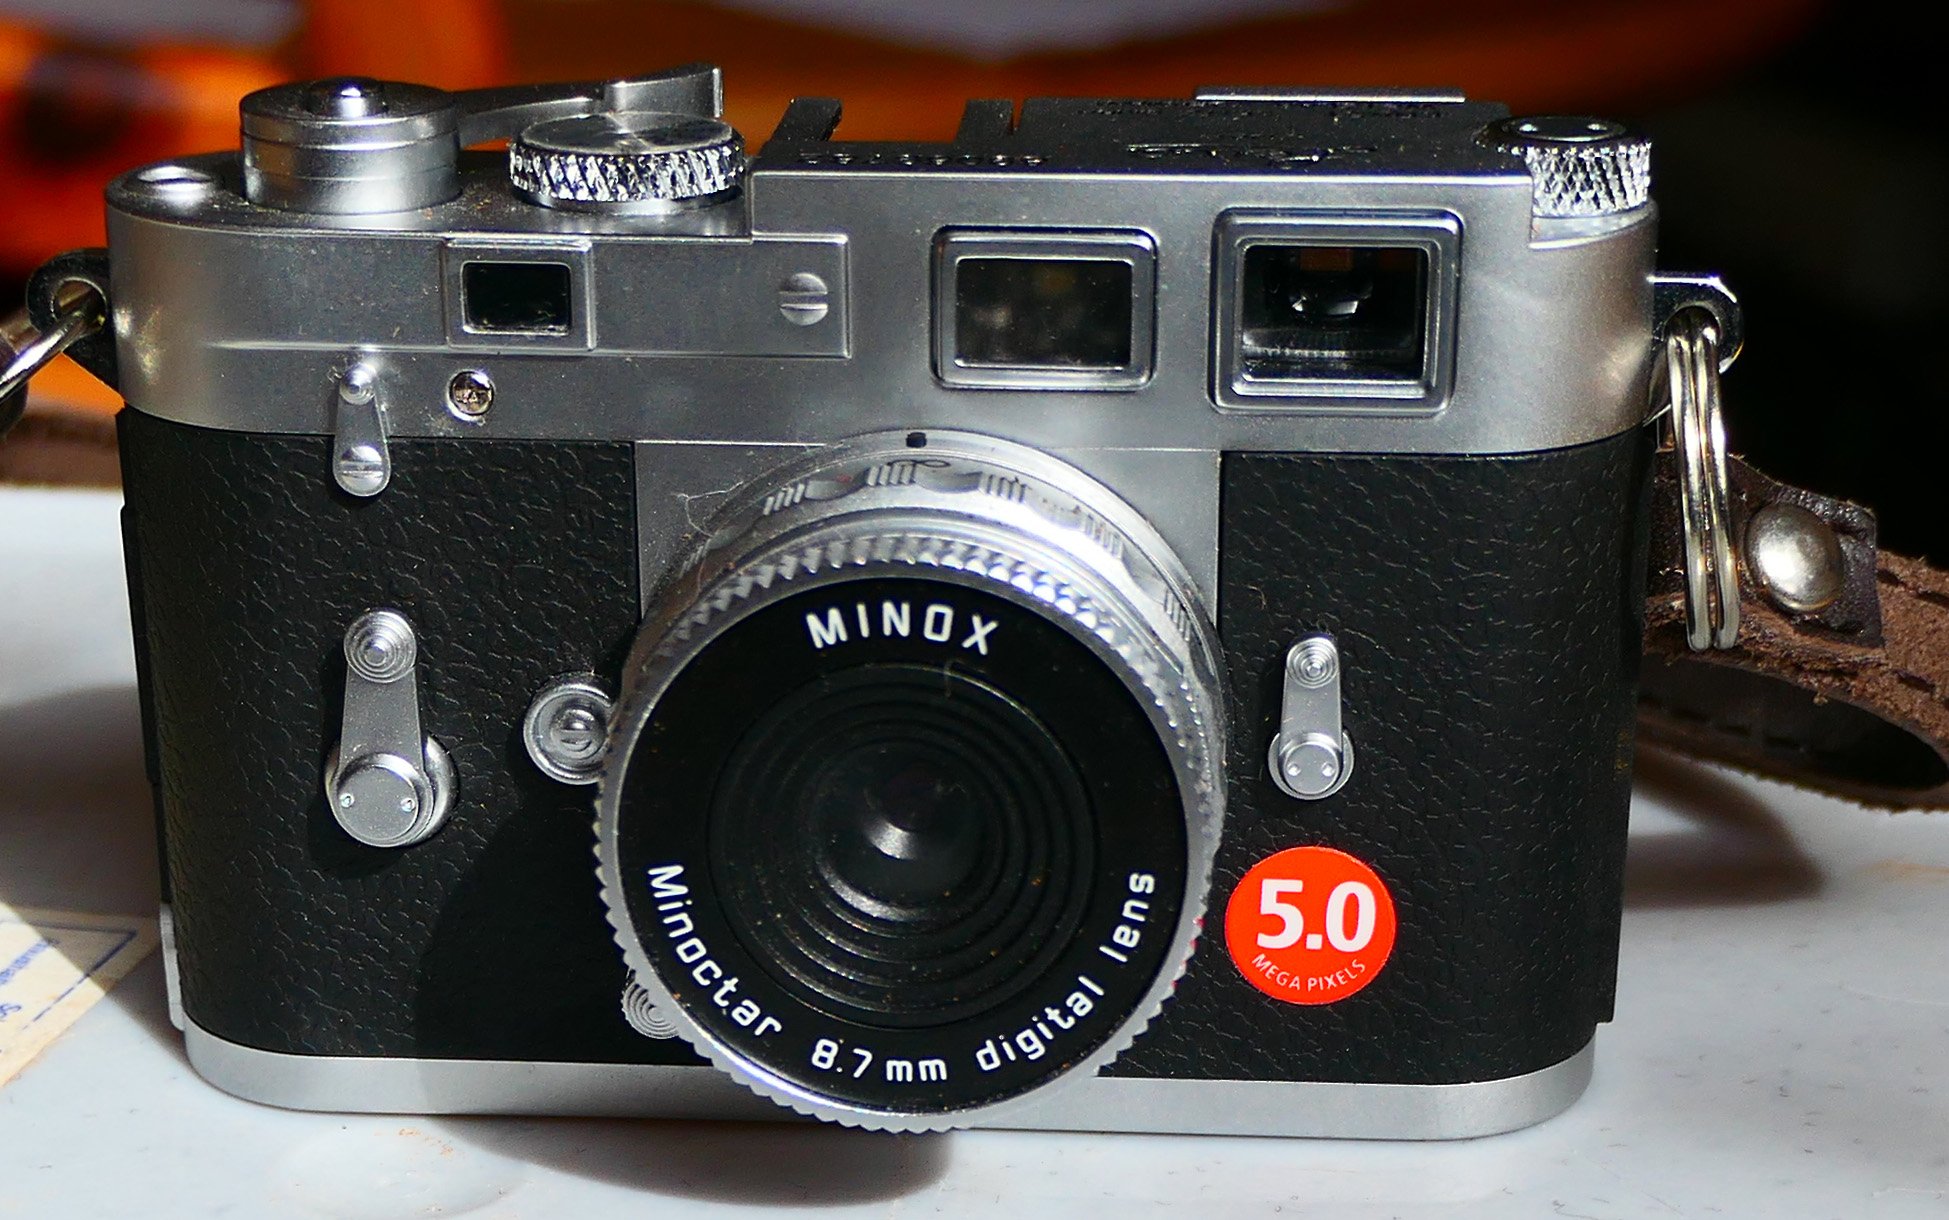 Digitalkamera	Leica Minox 5,0 (museum comp:ex CC BY-NC-SA)